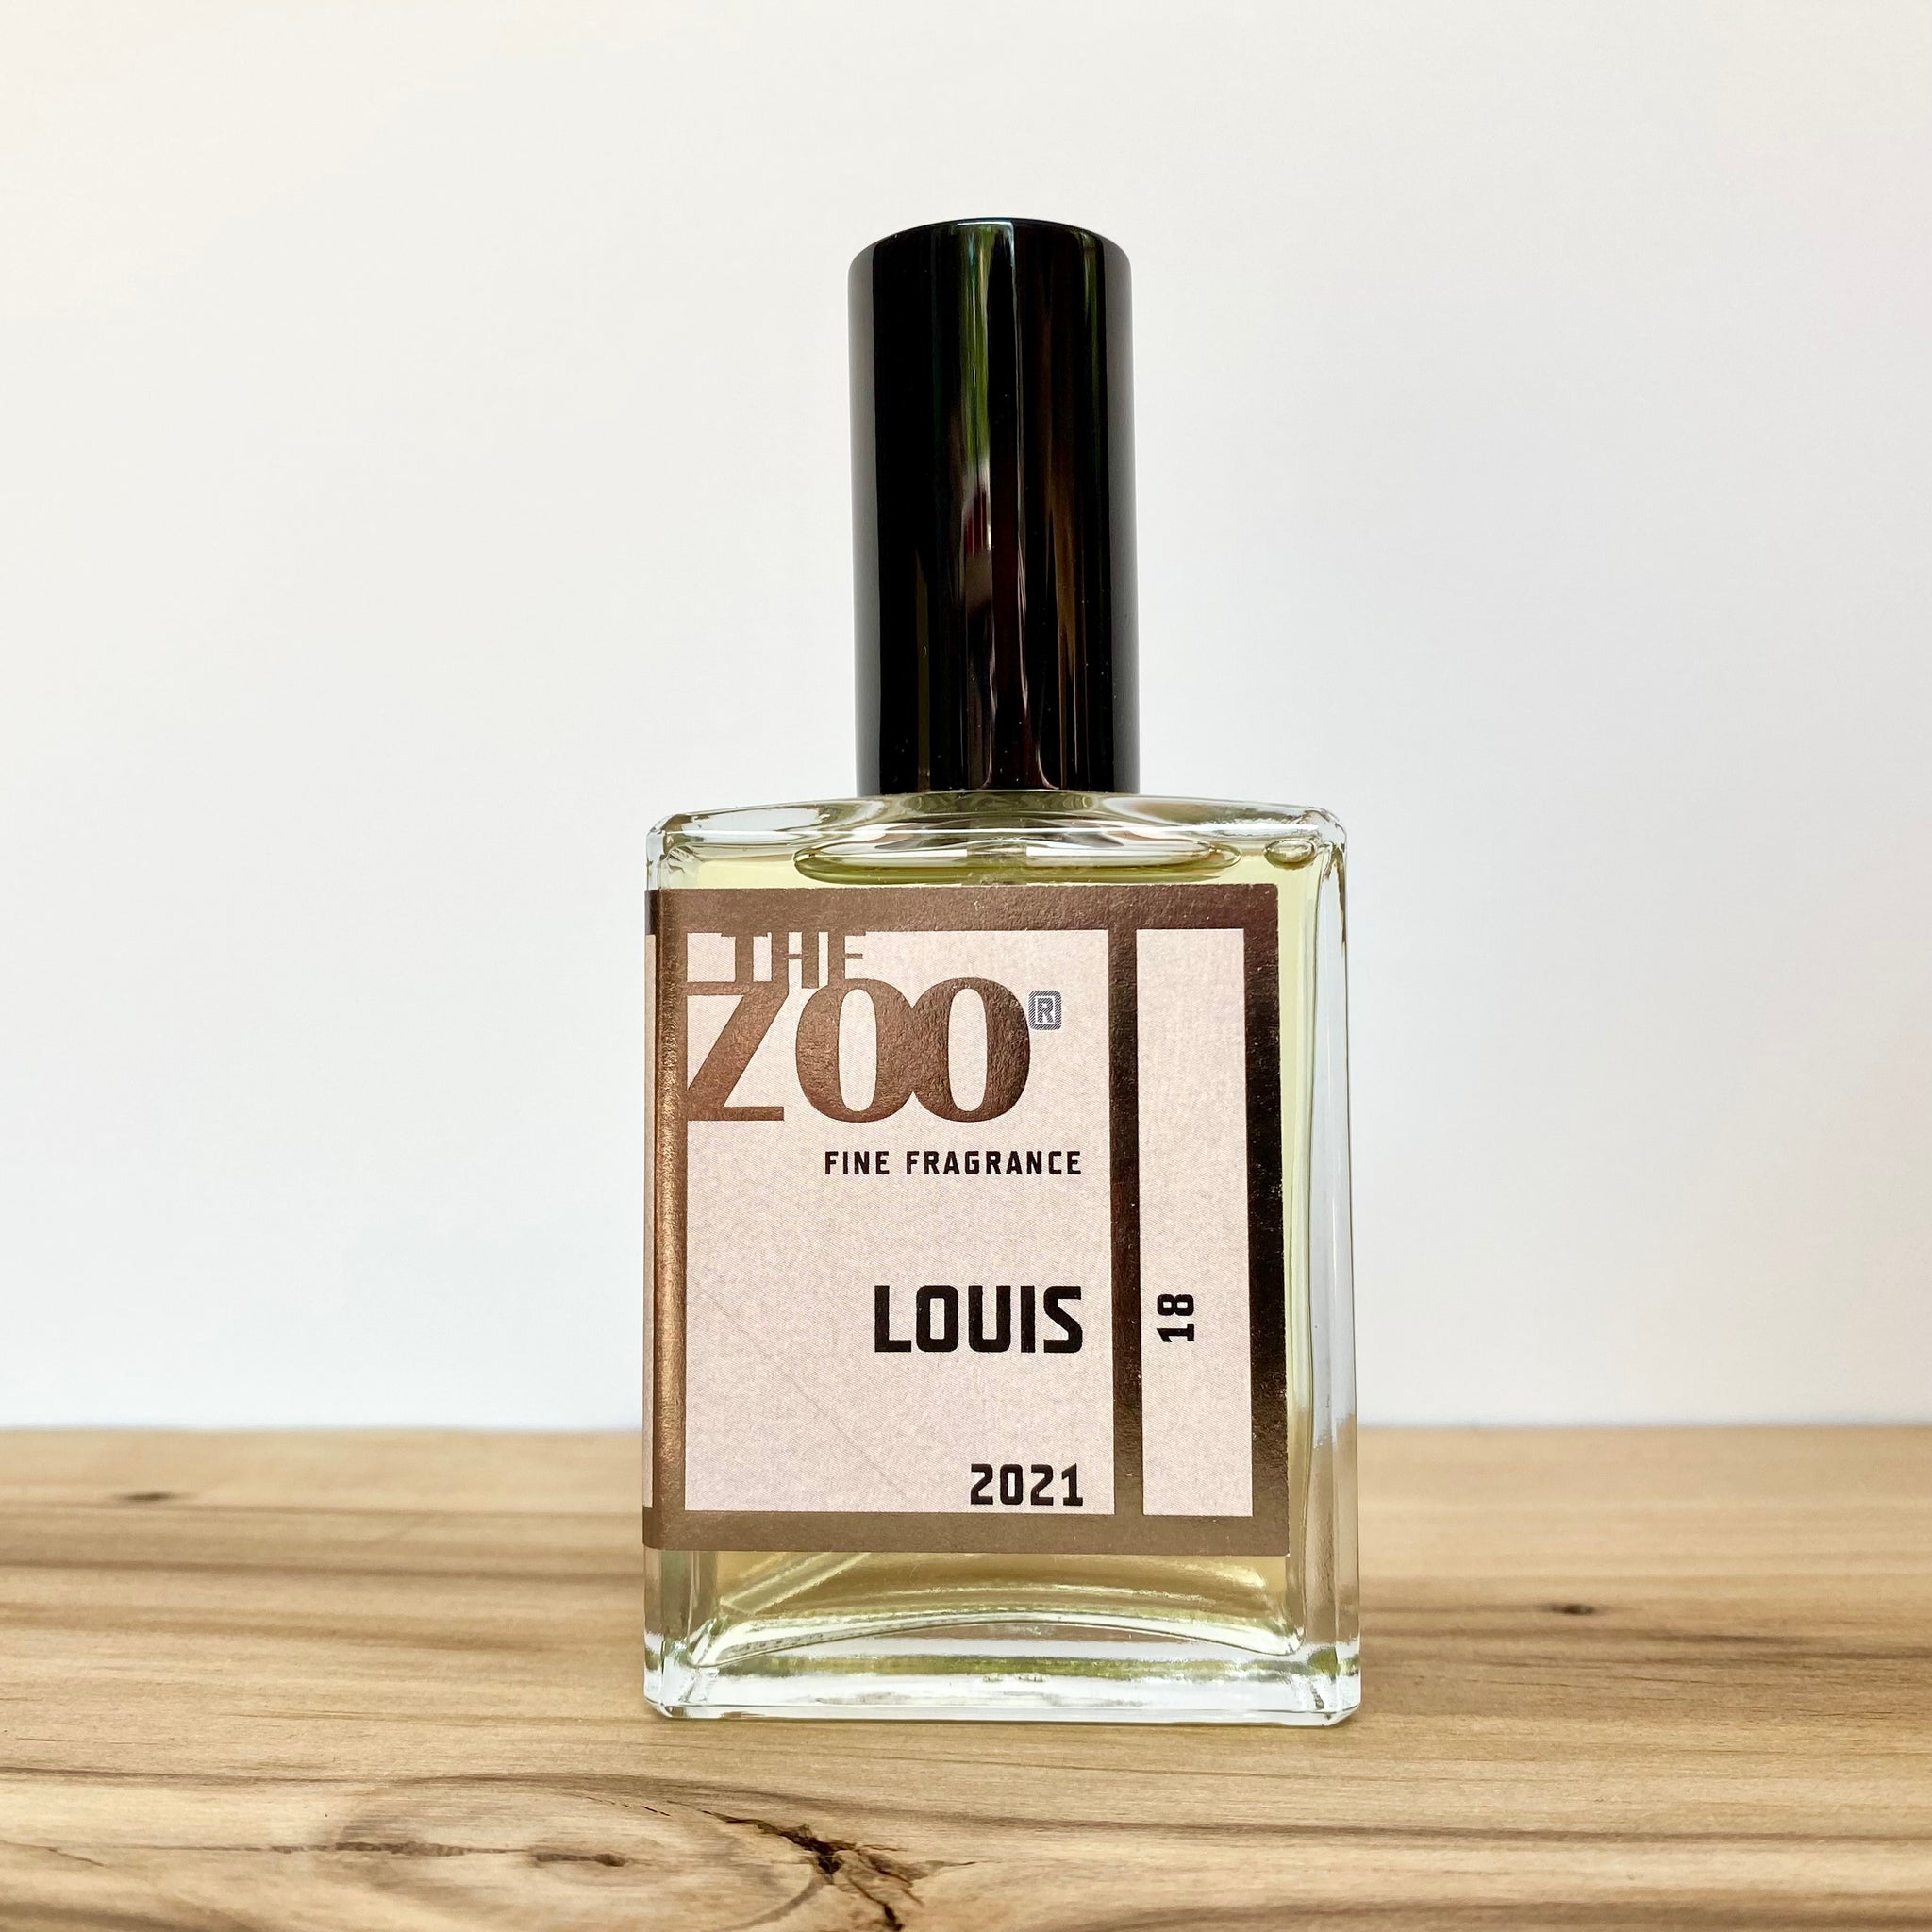 Similar Louis Vuitton brand perfumes